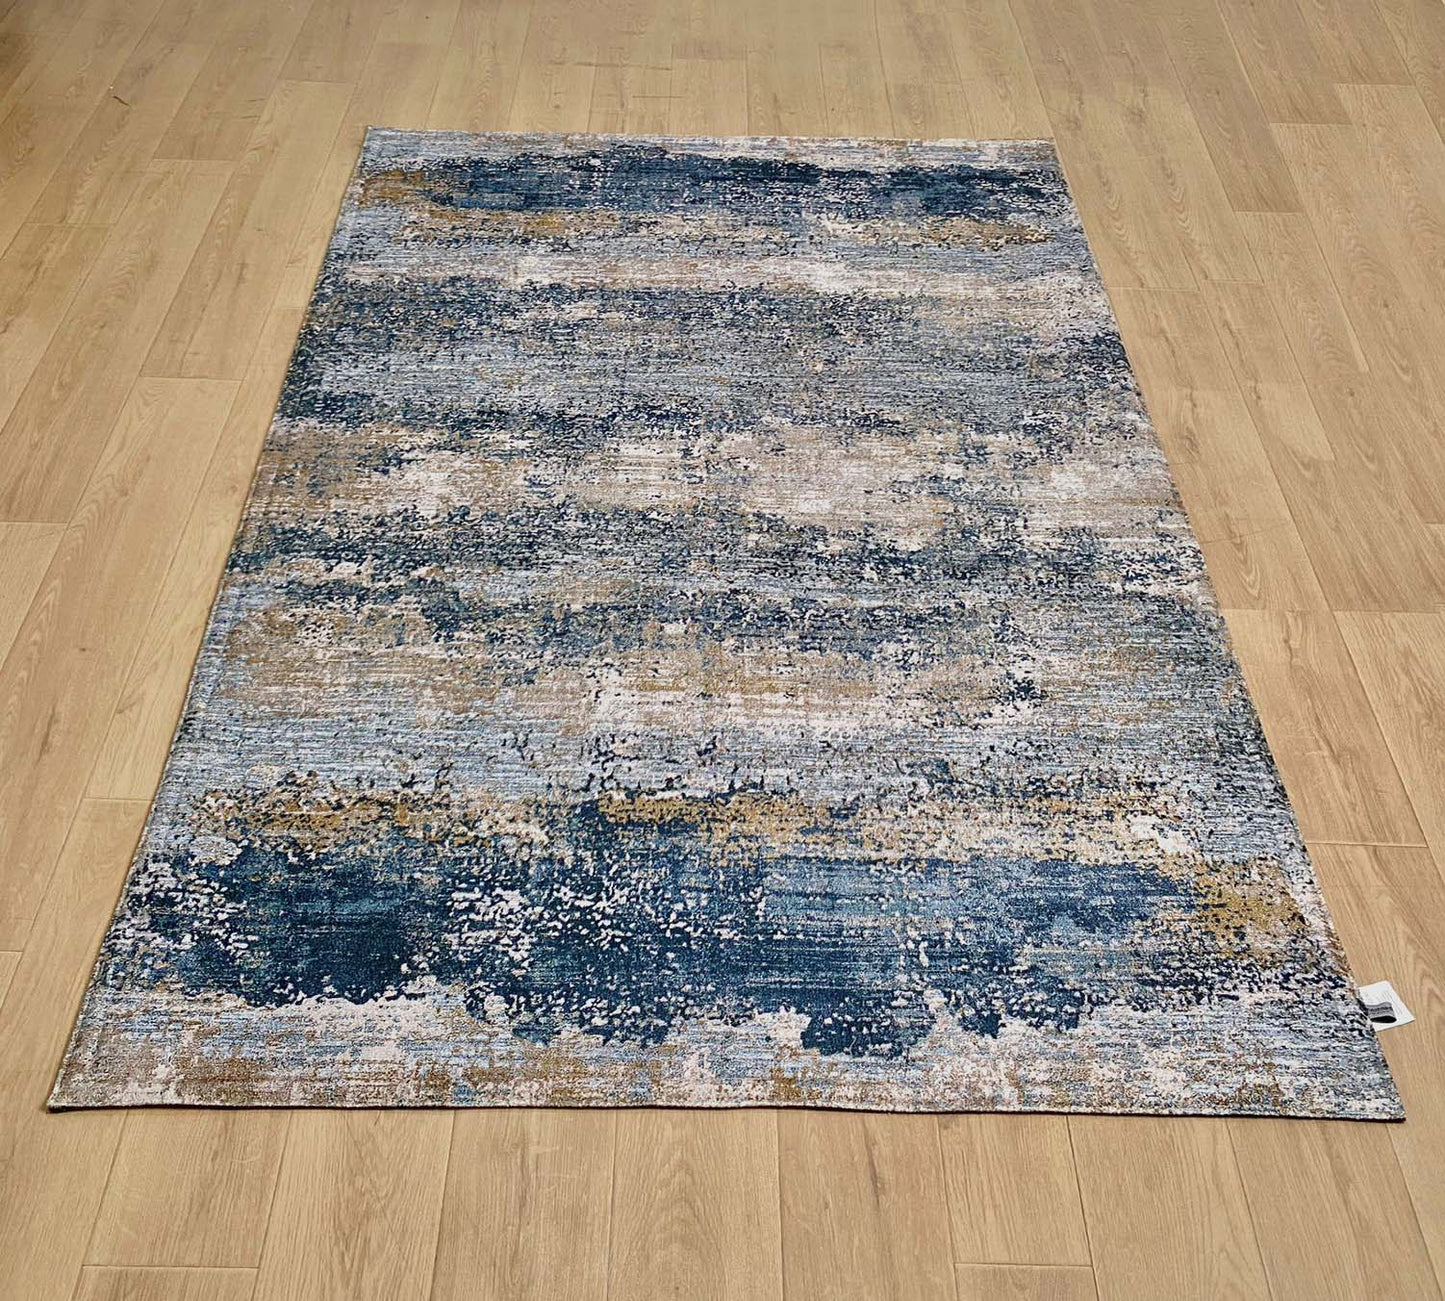 Karpet Abstrak (BK-A-0012) - Black,Grey,Brown